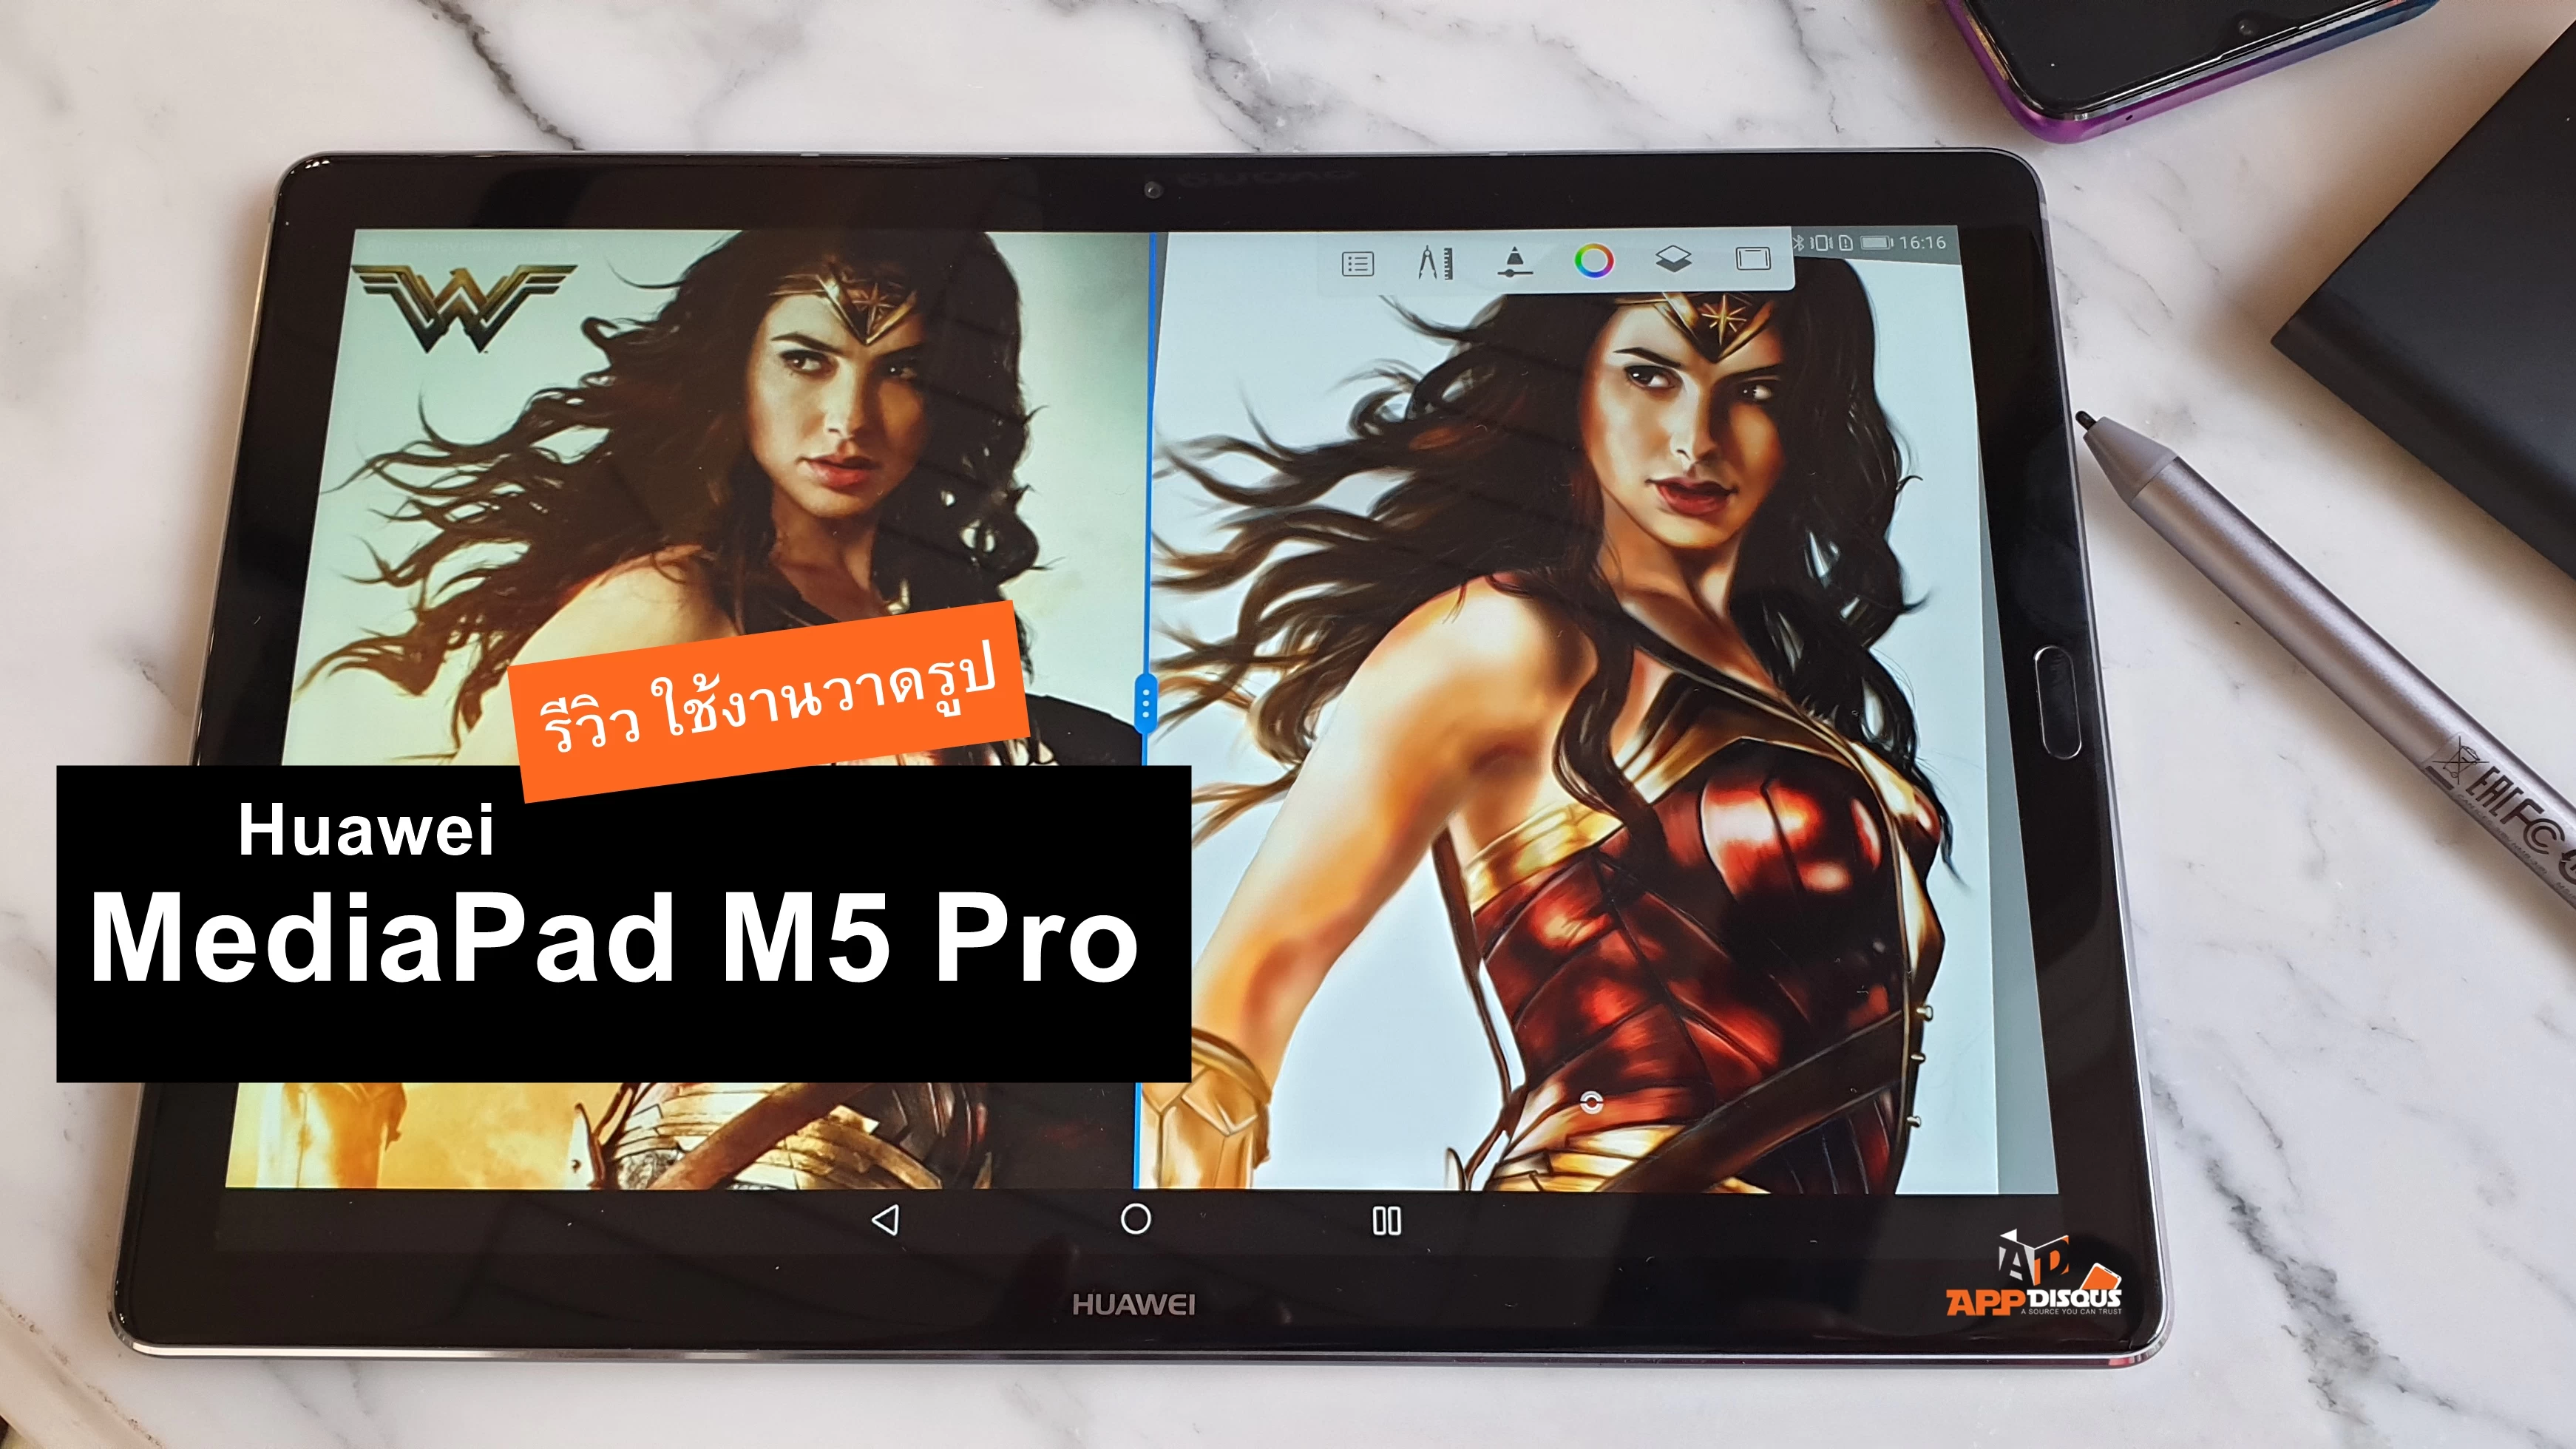 20181114 161634 | AppDisqus | รีวิวแท็ปเล็ตน้องใหม่ MediaPad M5 Pro กับการใช้งานด้านวาดรูปโดยเฉพาะ มันน่าสอยมาก!!